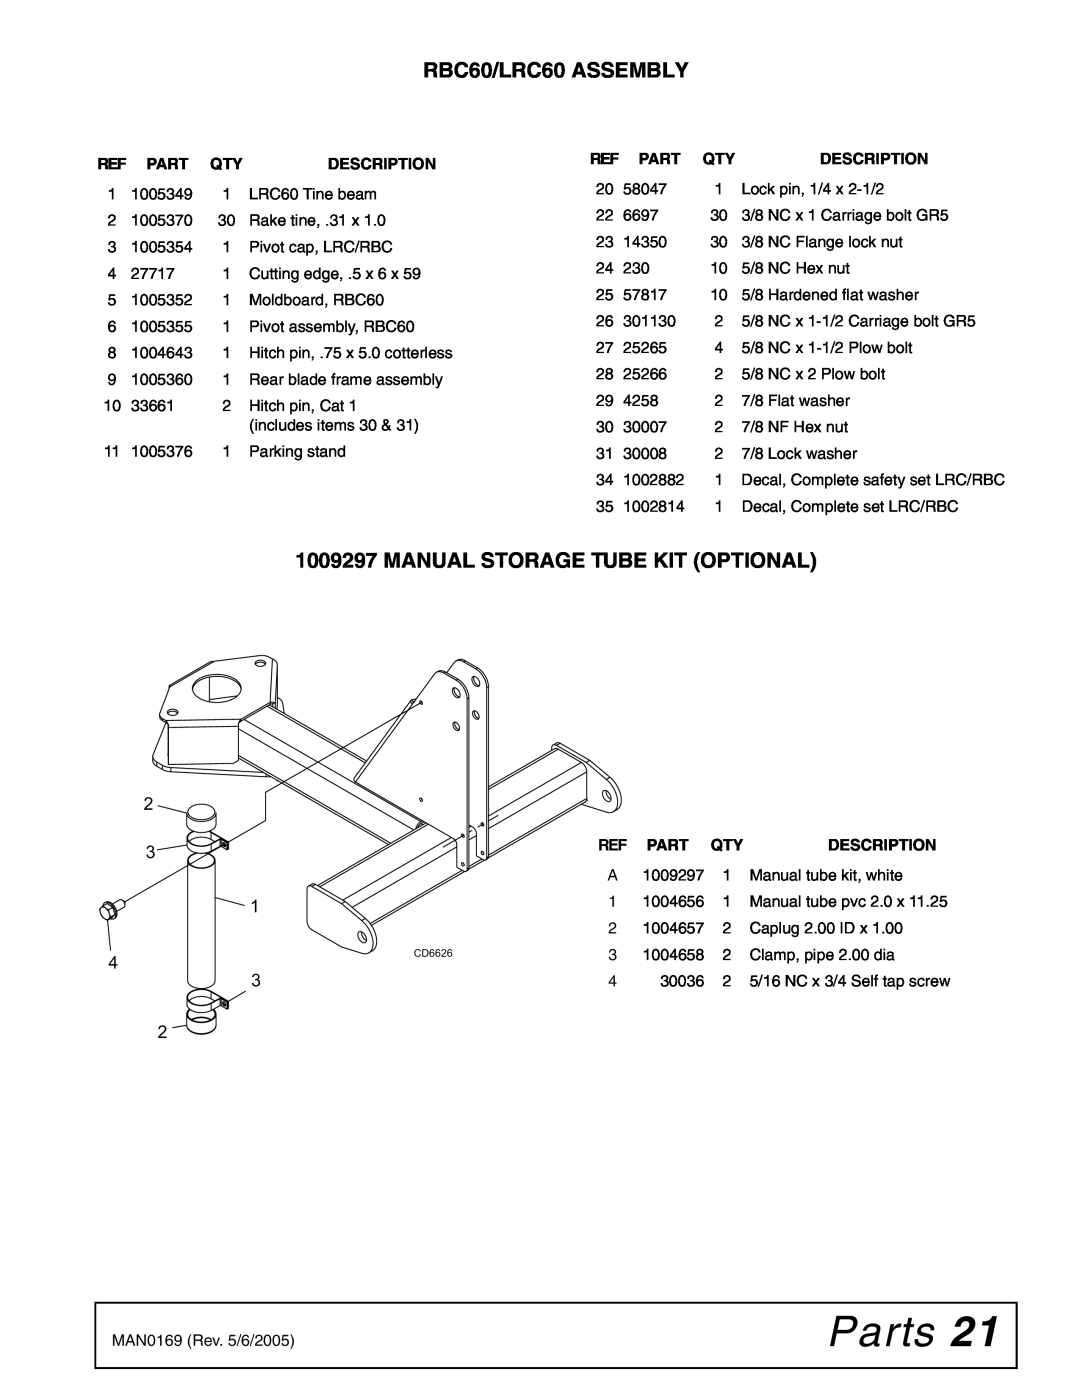 Woods Equipment RBC60 LRC60 manual Parts, Manual Storage Tube Kit Optional, RBC60/LRC60 ASSEMBLY, Description 